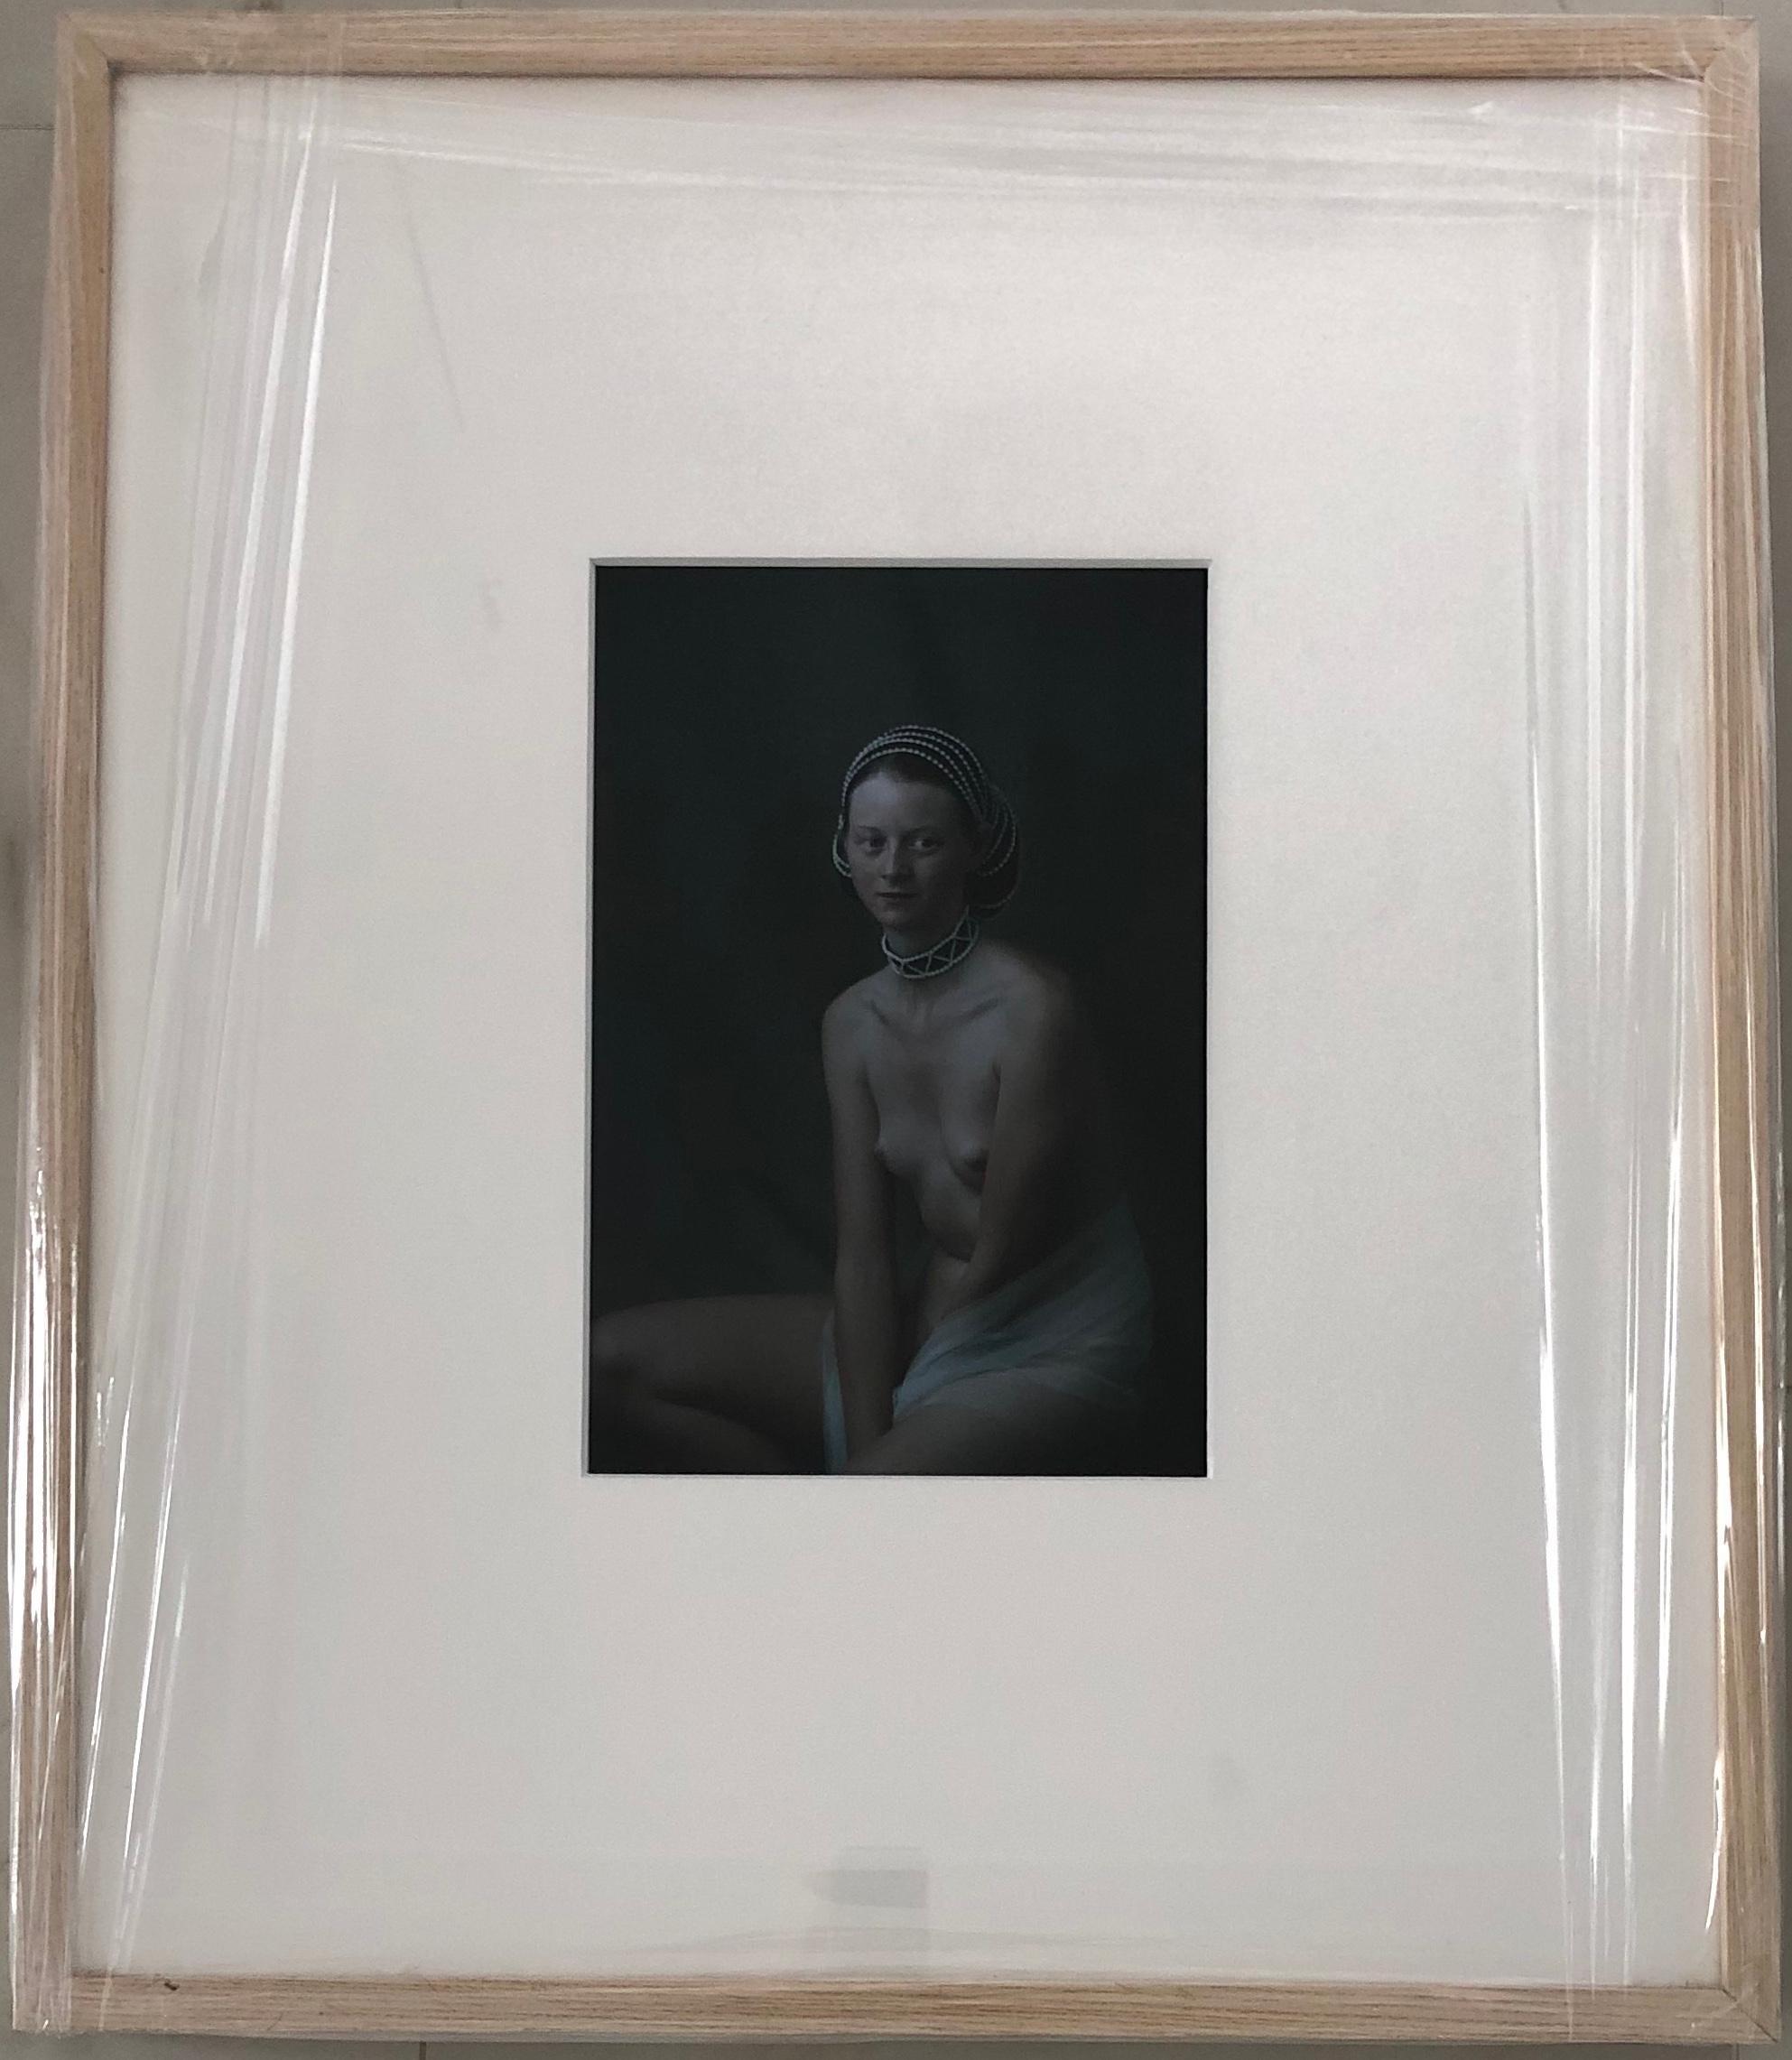 Kristin, Framed Dye Transfer Print, 1980 - Photograph by Frank Horvat